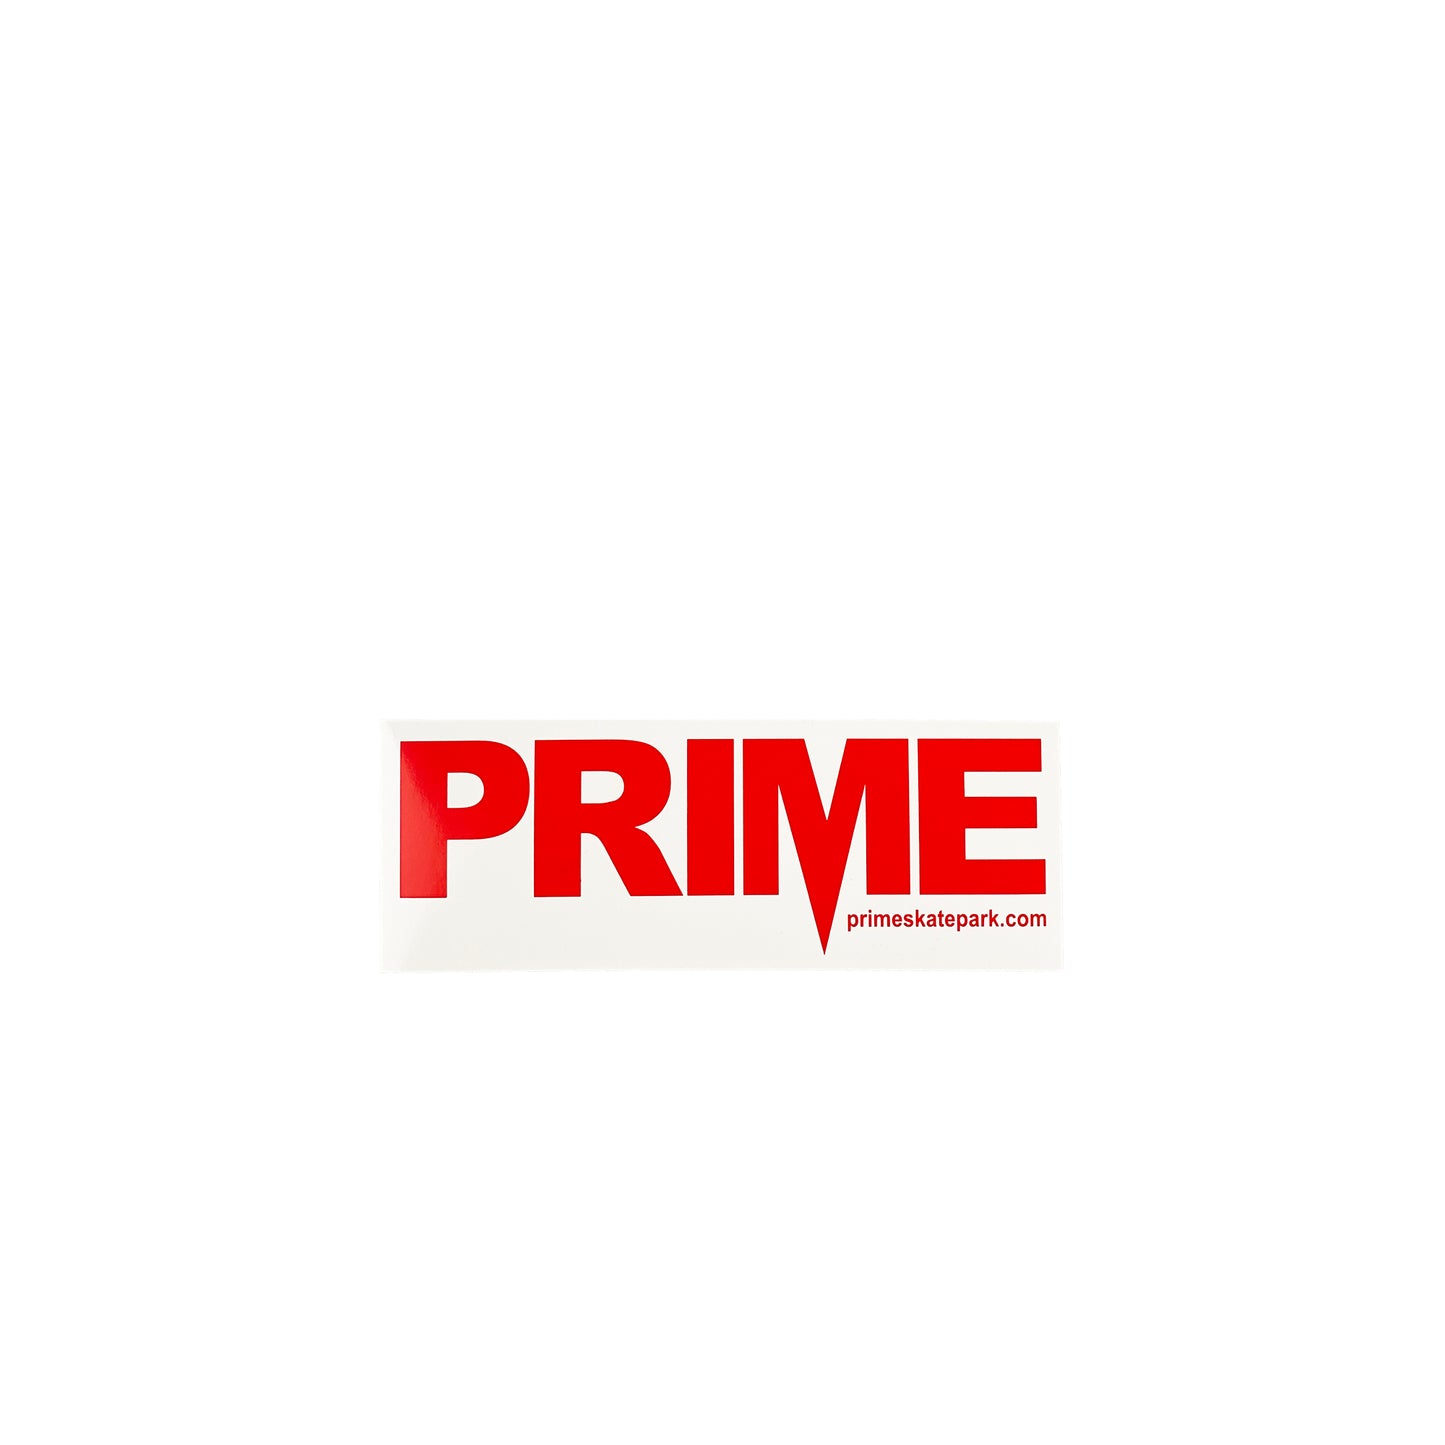 Prime Delux OG SP Sticker M - Red / White - Prime Delux Store